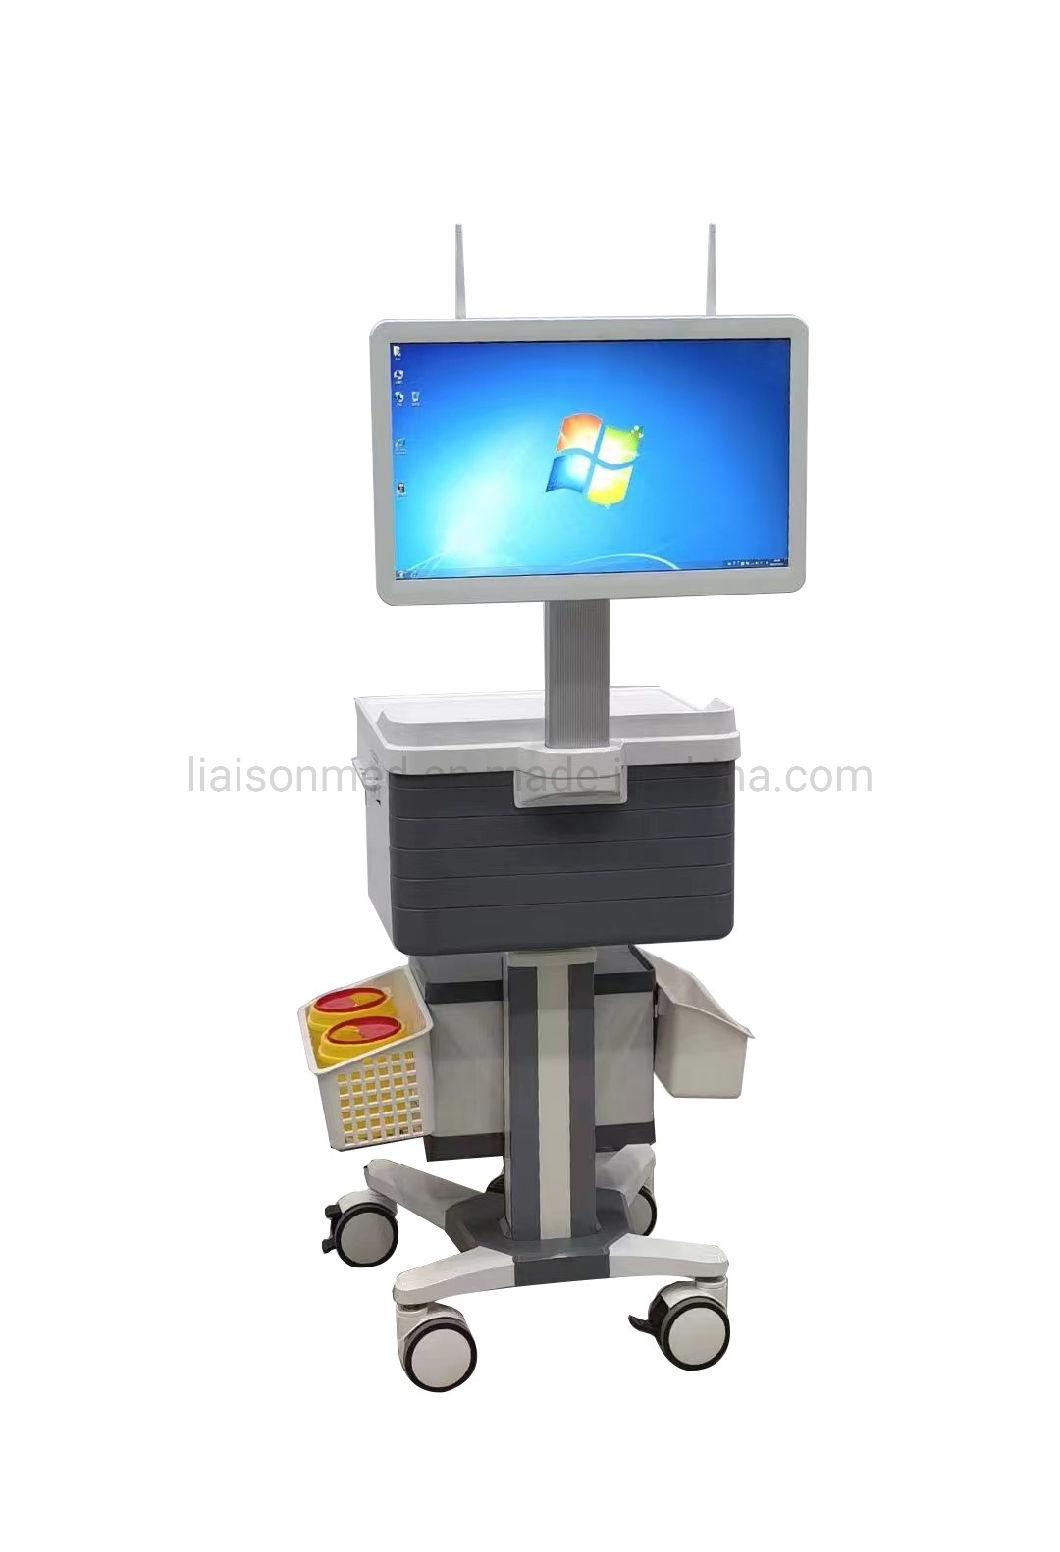 Mn-CPU001 Hot Sales Height Adjustable Mobile Hospital Computer Medicine Trolley